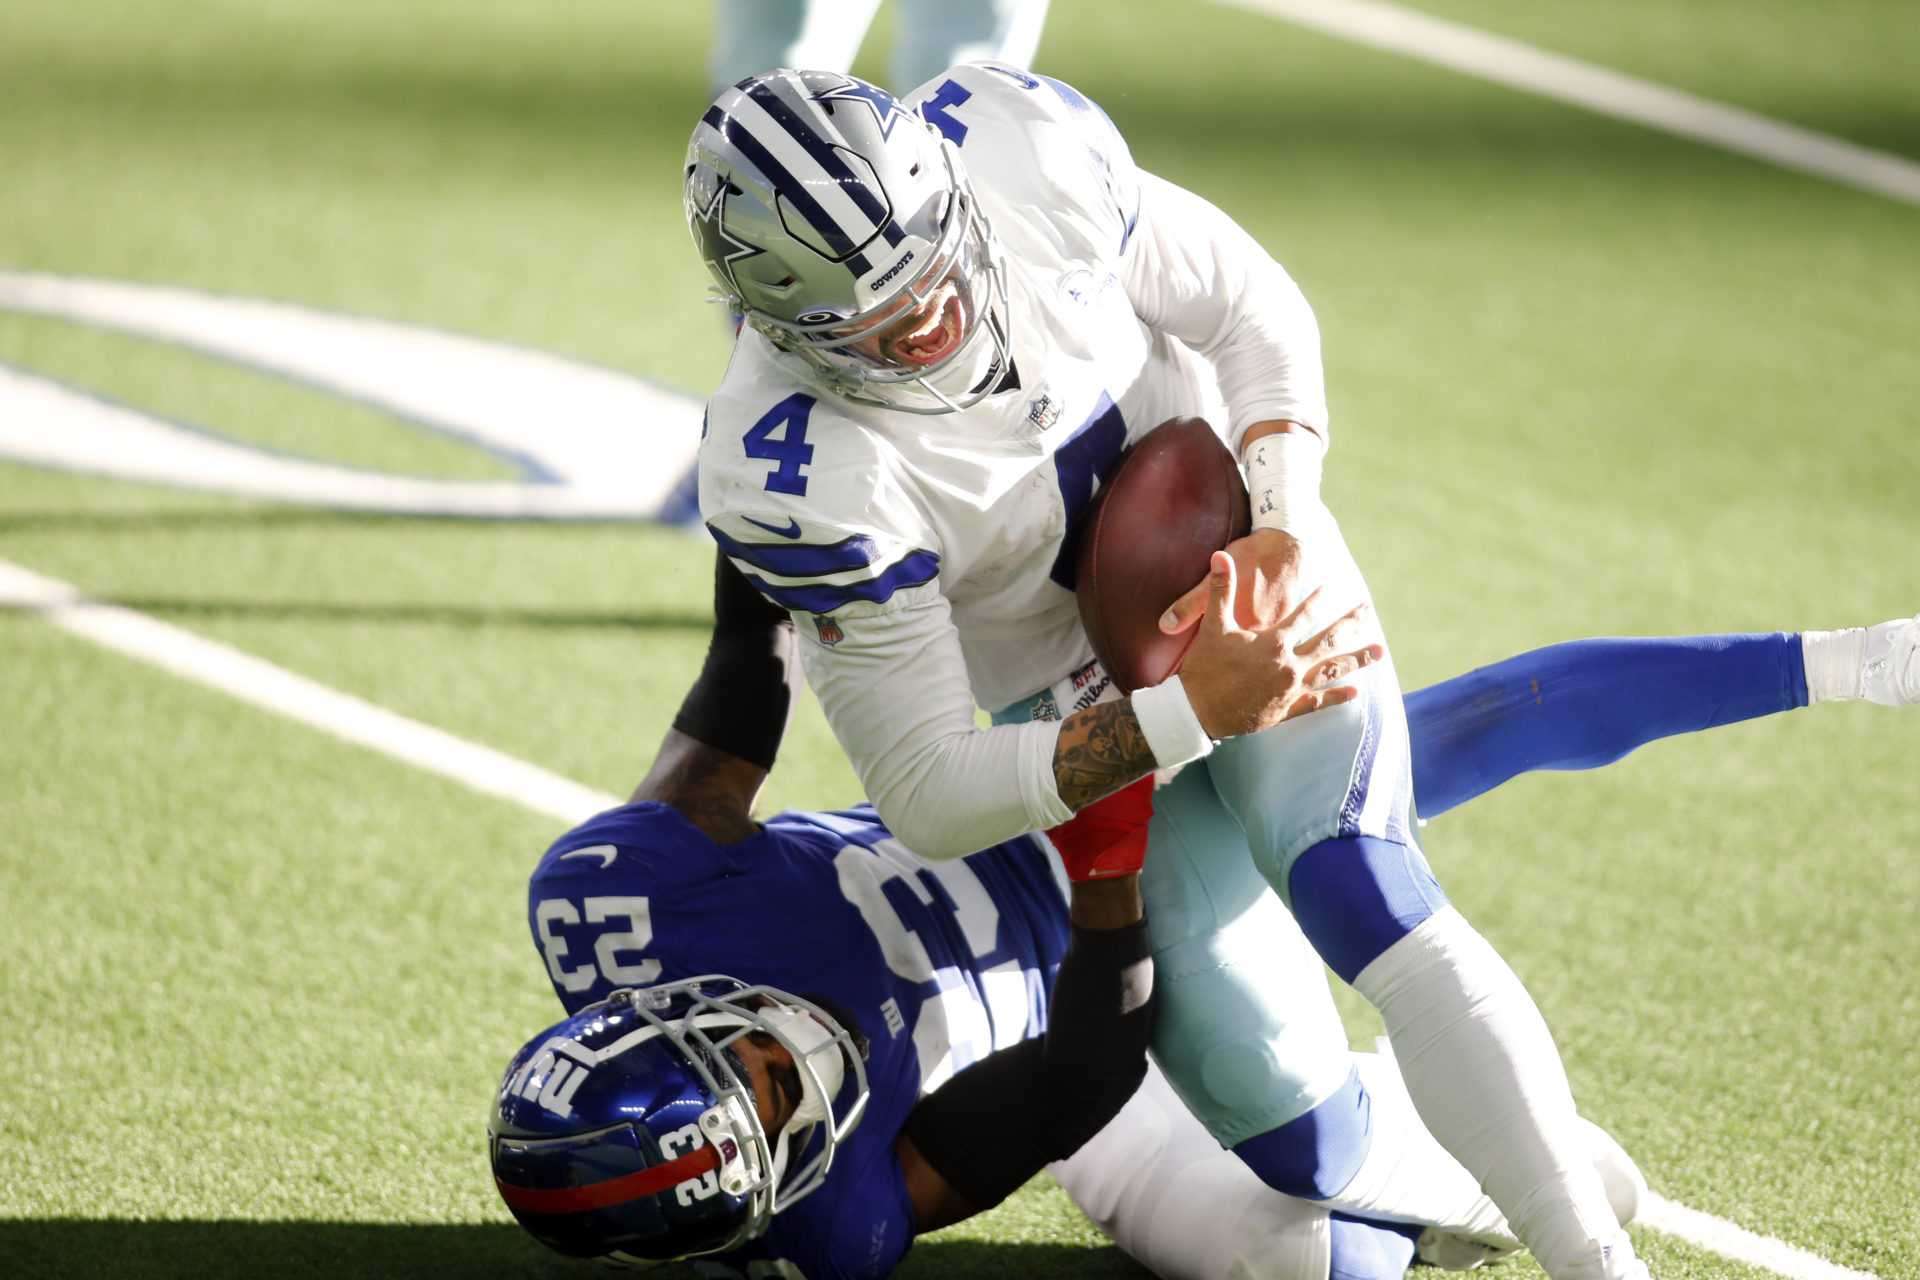 L'analyste de la NFL Adam Schefter explique comment la re-signature de Dak Prescott aide les Cowboys de Dallas à limiter les contraintes